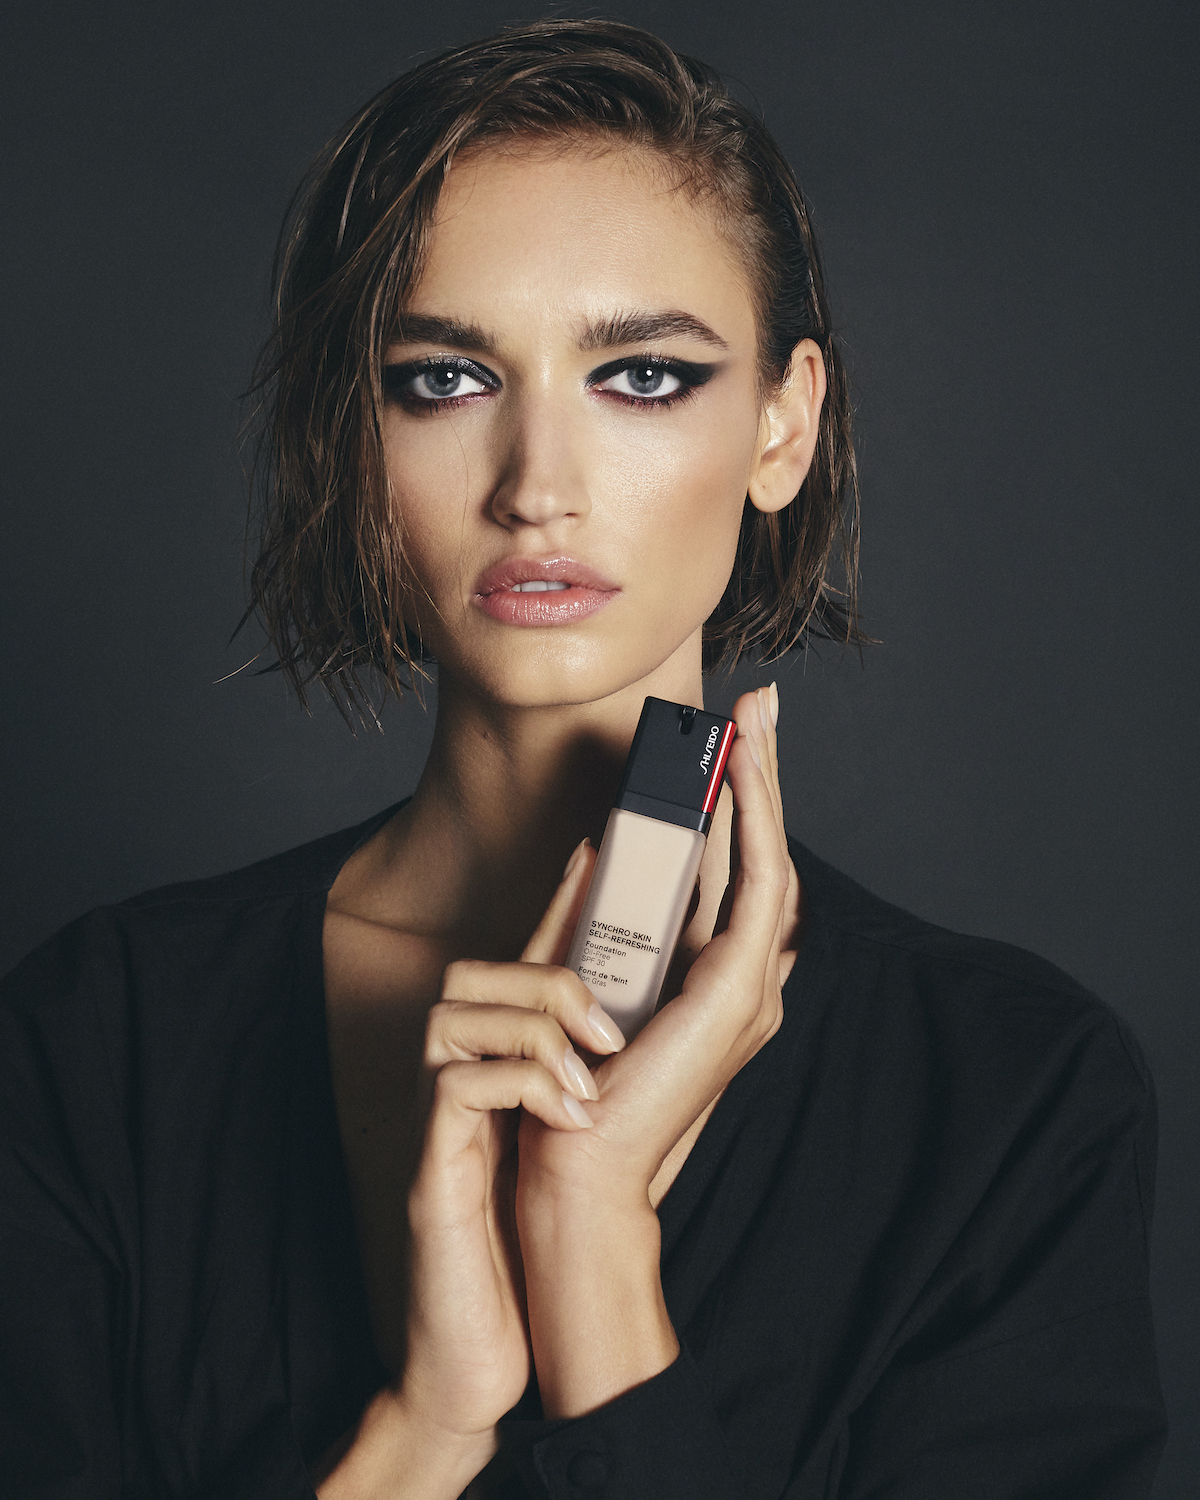 Shiseido donna skinimalism makeup naturale donna viso